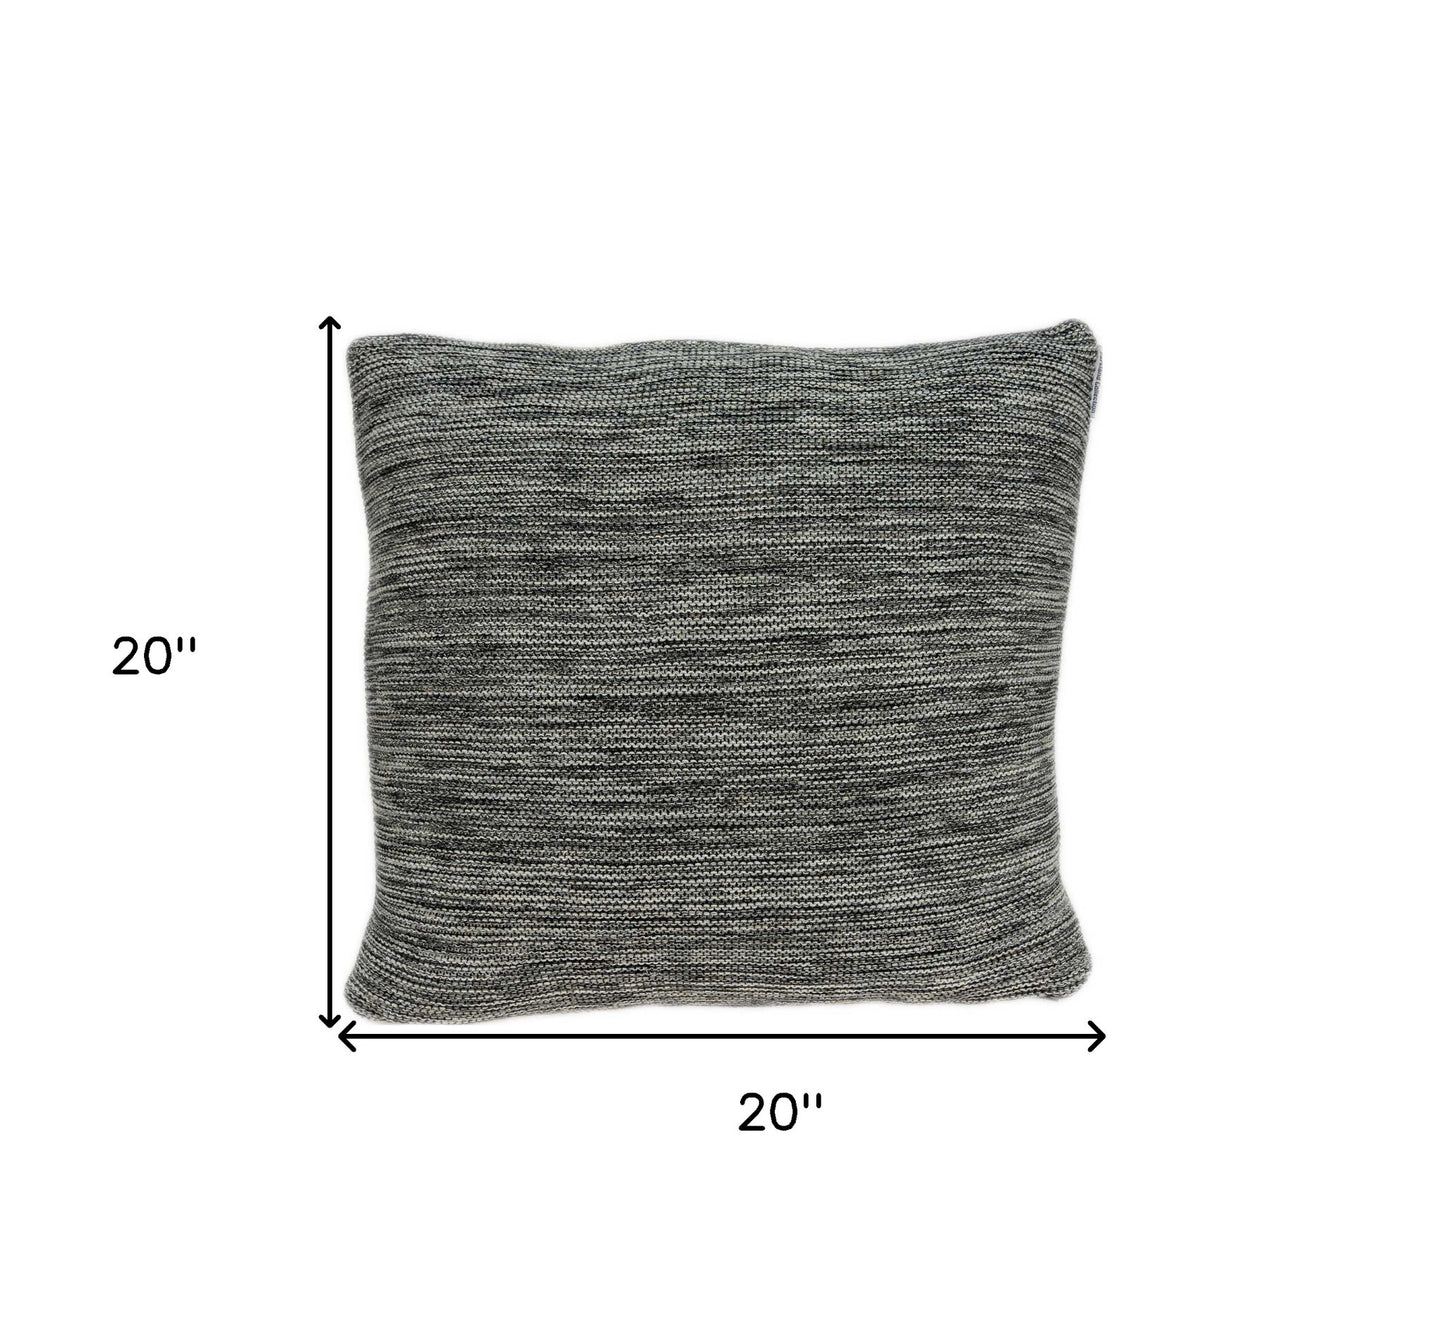 20" Gray Woven Cotton Blend Throw Pillow